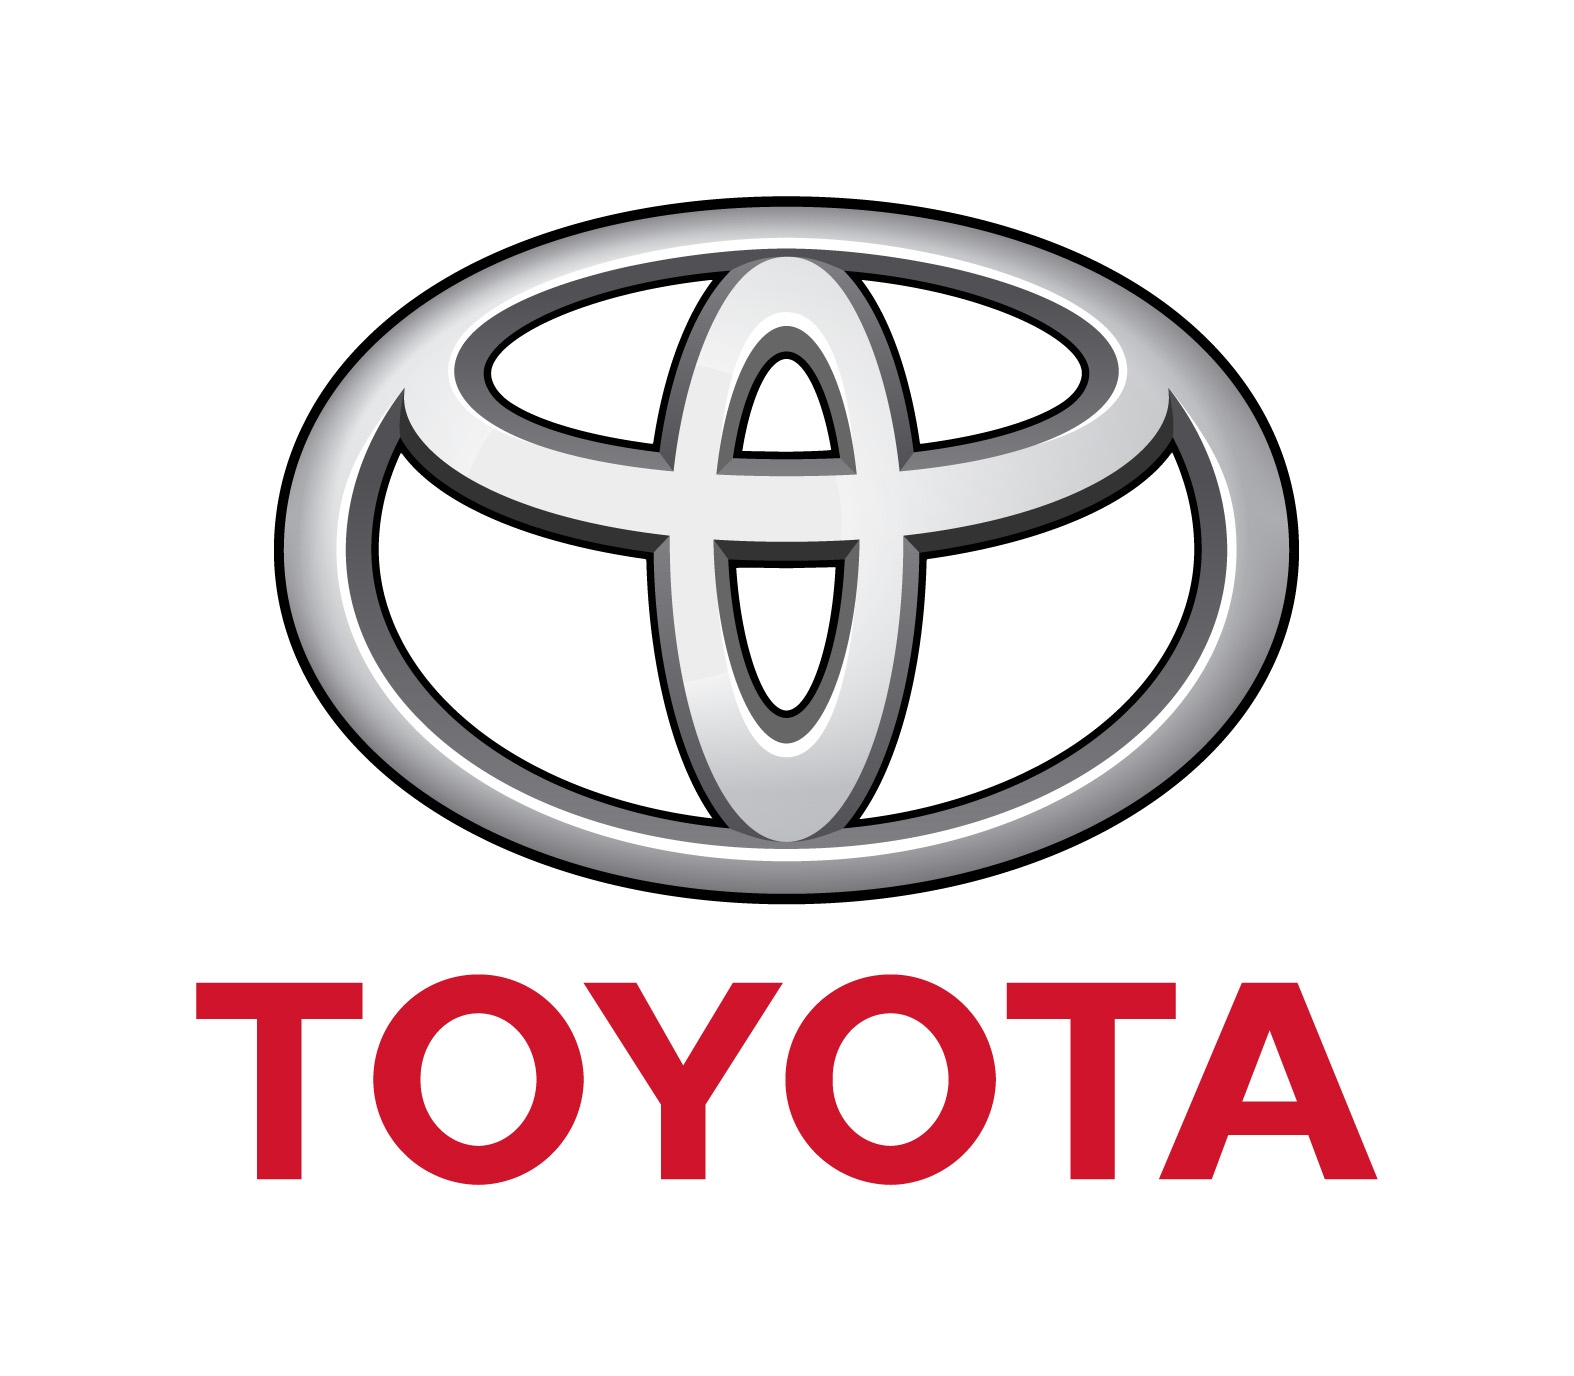 Toyota Logo Jpg - KibrisPDR